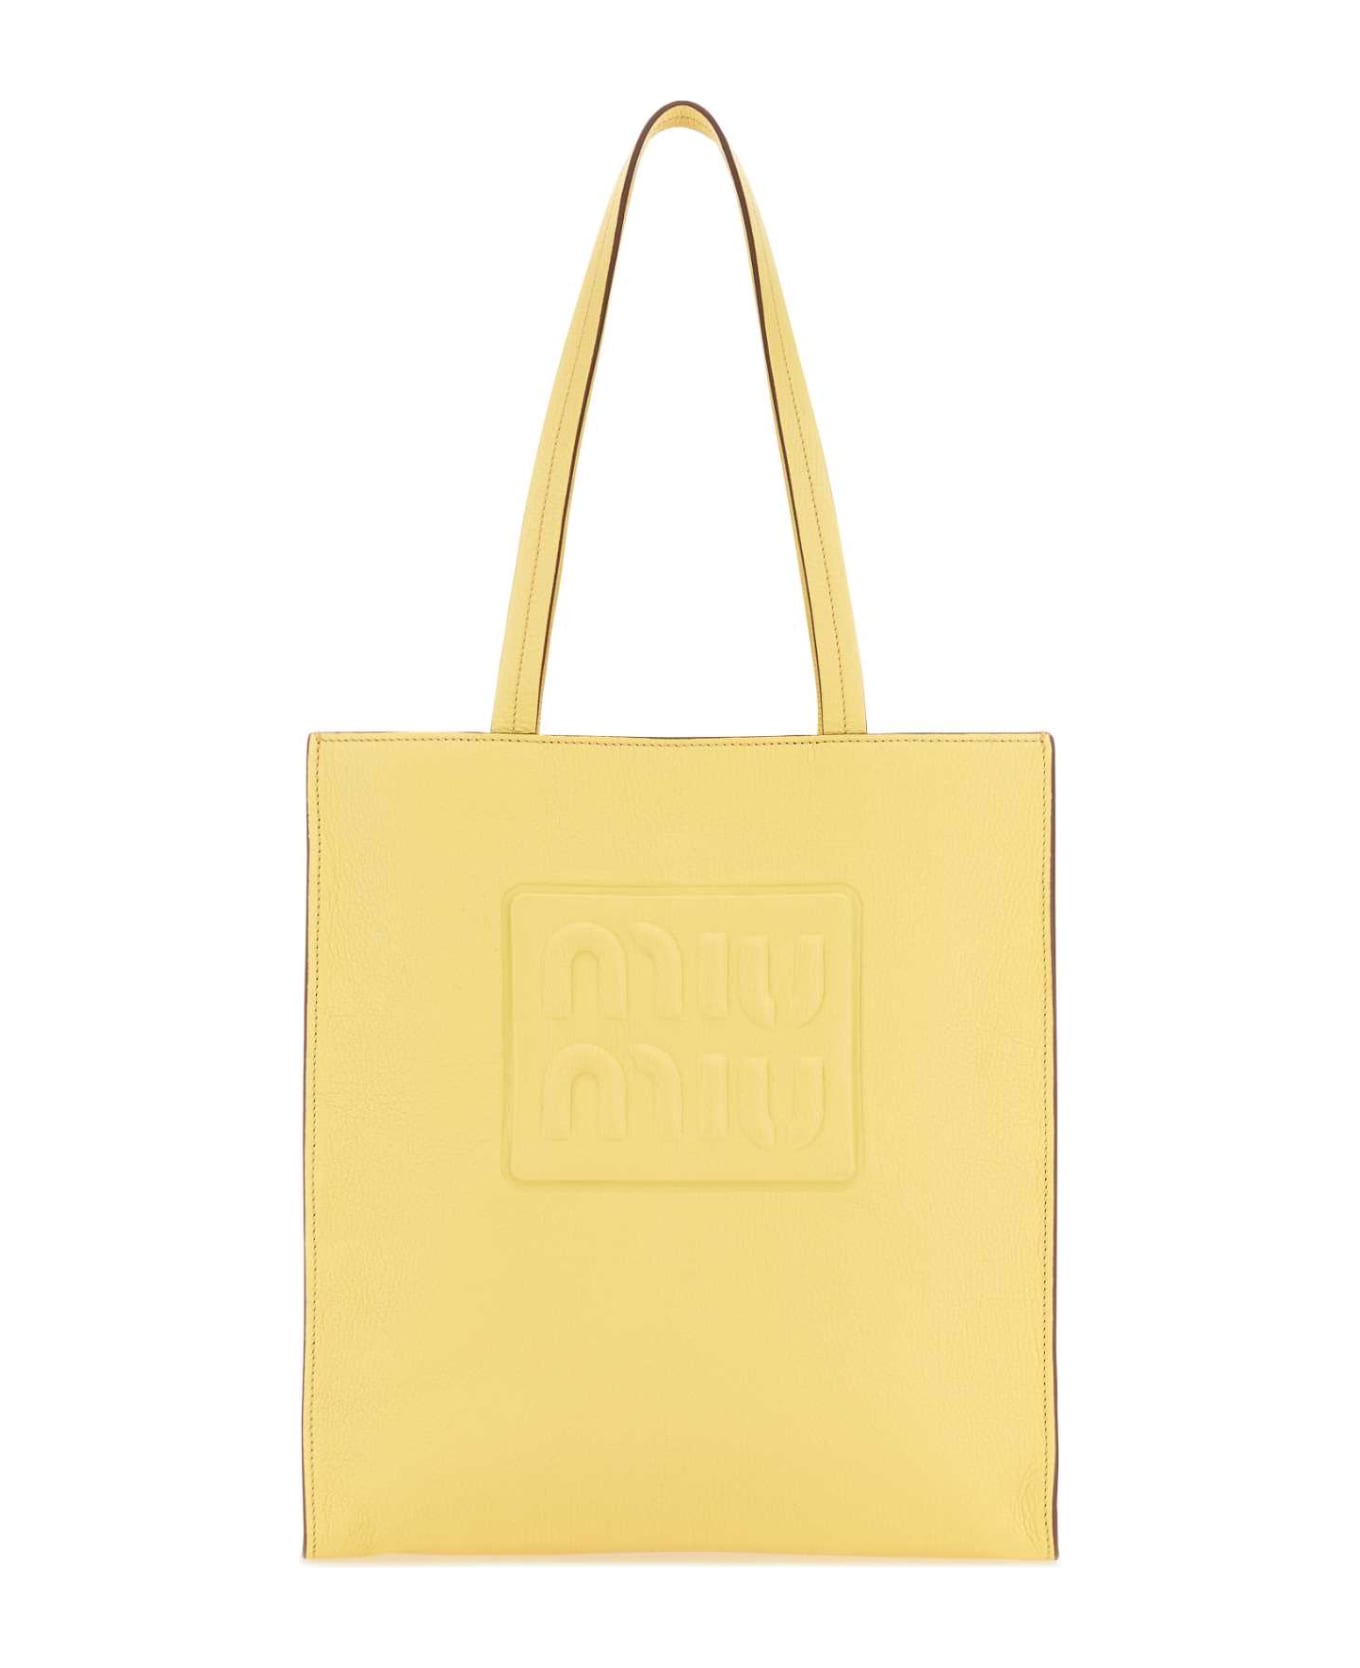 Miu Miu Pastel Yellow Leather Shopping Bag - LIMONE